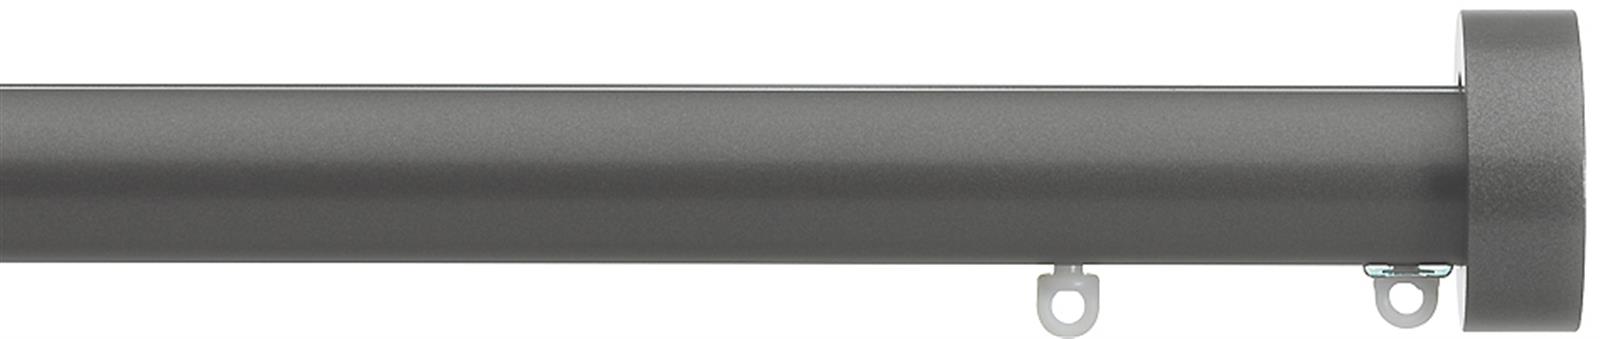 Silent Gliss Metropole 23mm 7600 Gun Metal Design Endcap Finial